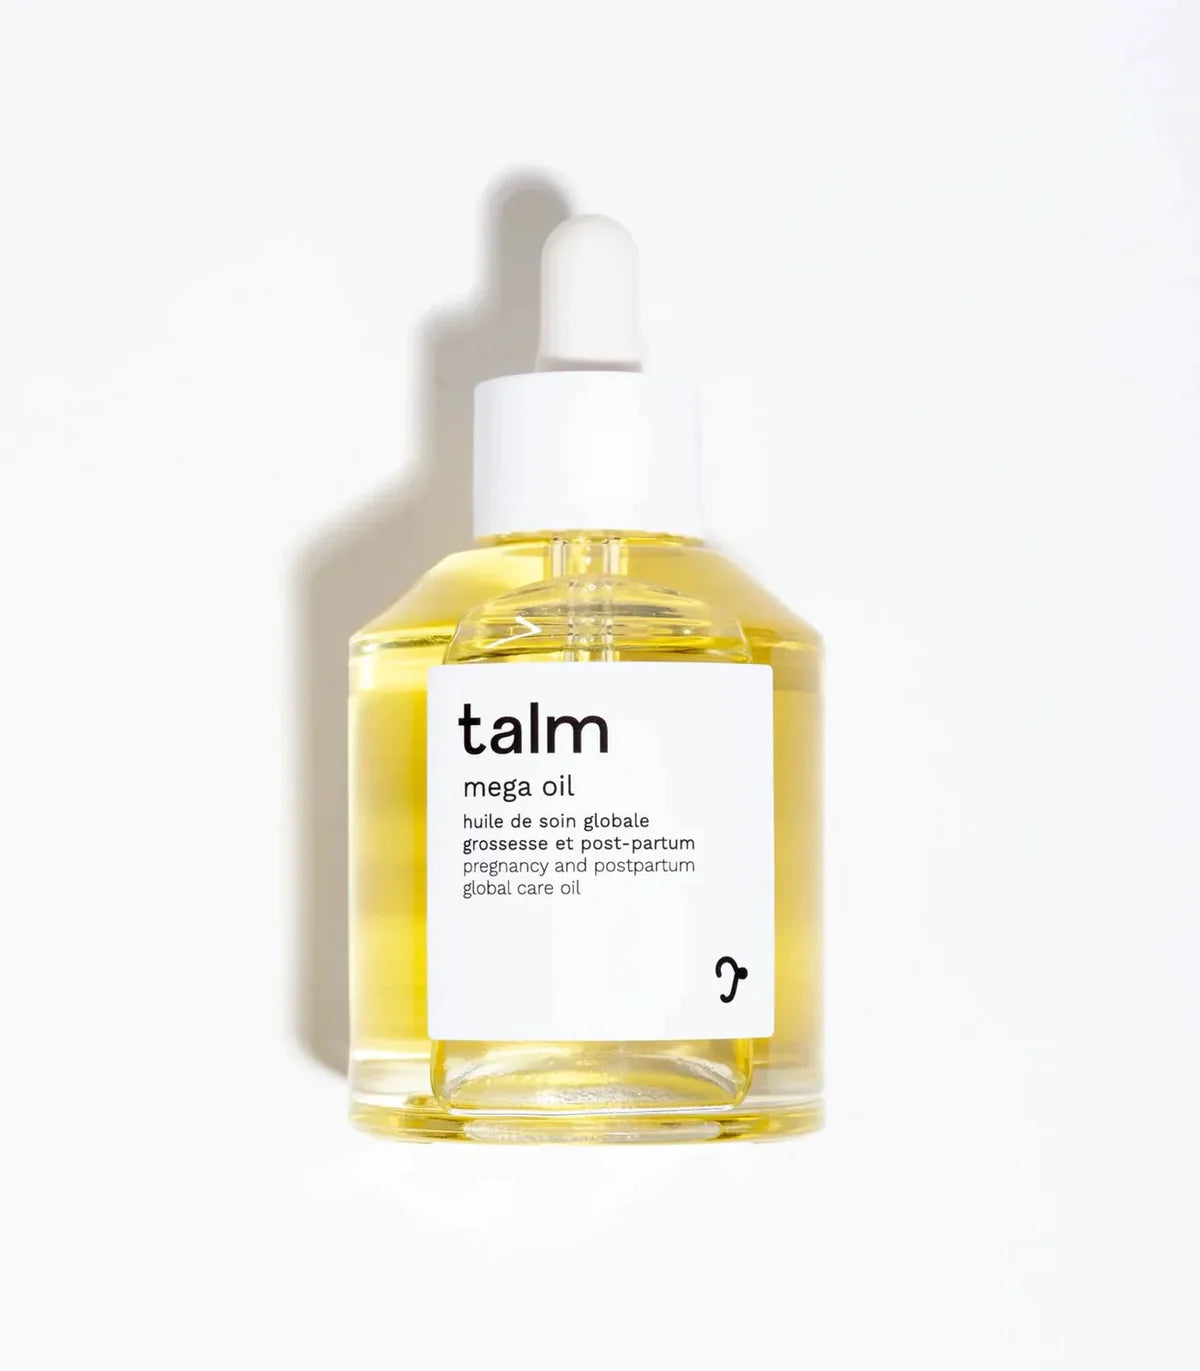 Talm - Mega oil - Global skincare oil for pregnancy and postpartum (30ml)